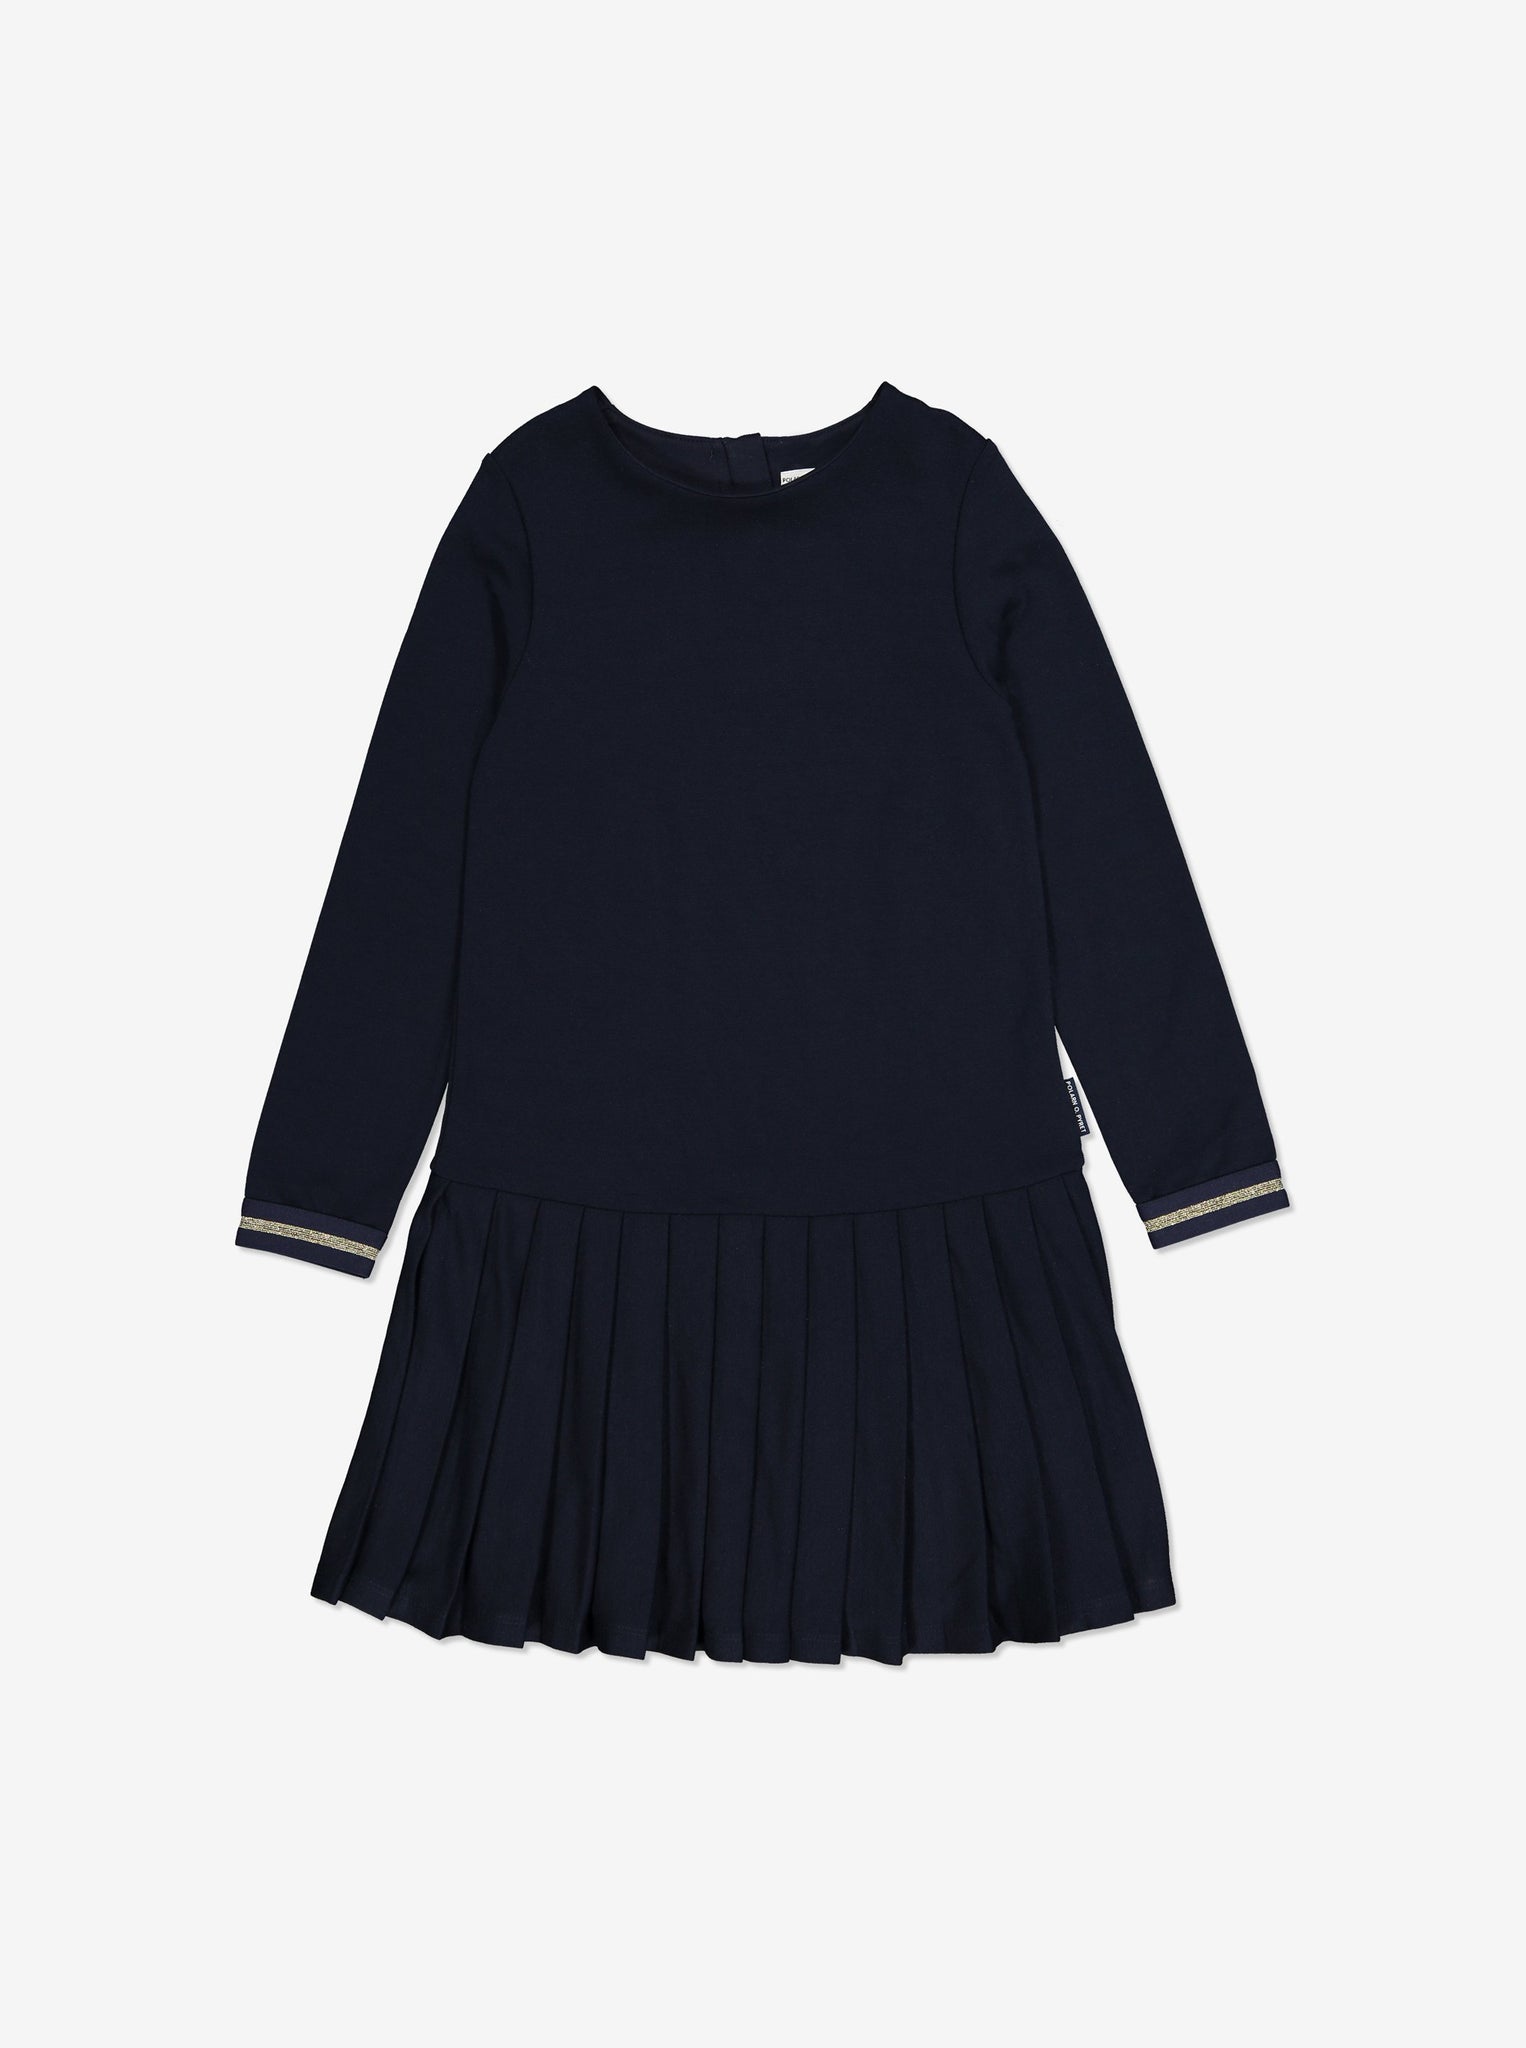 Pleated Skirt Kids Dress-Girl-1-6y-Navy